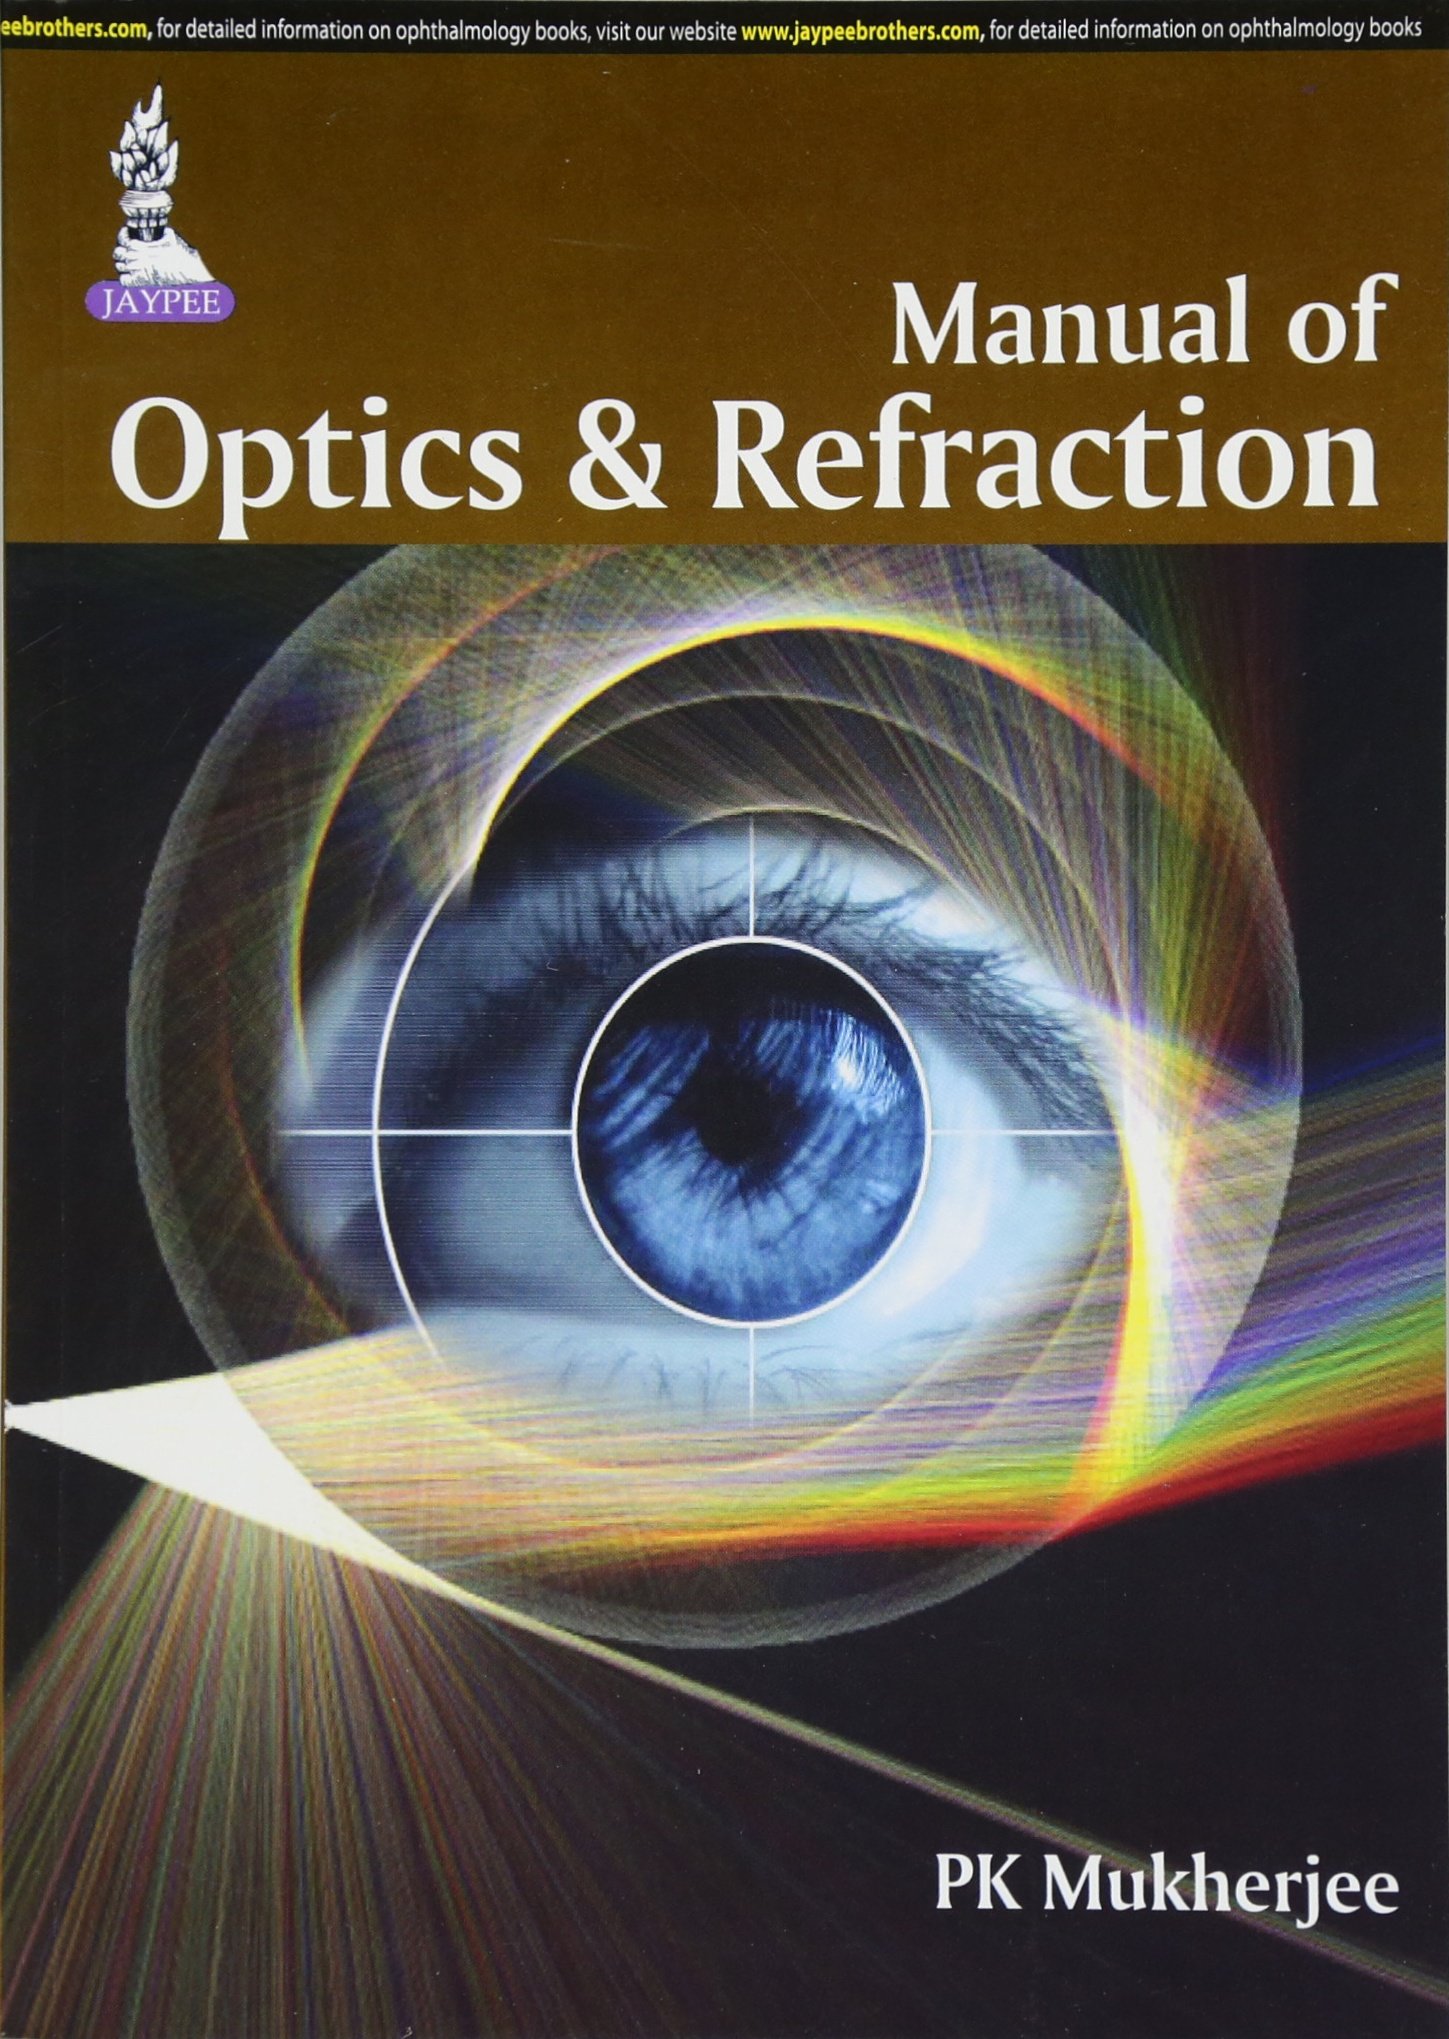 Manual of optics & refraction